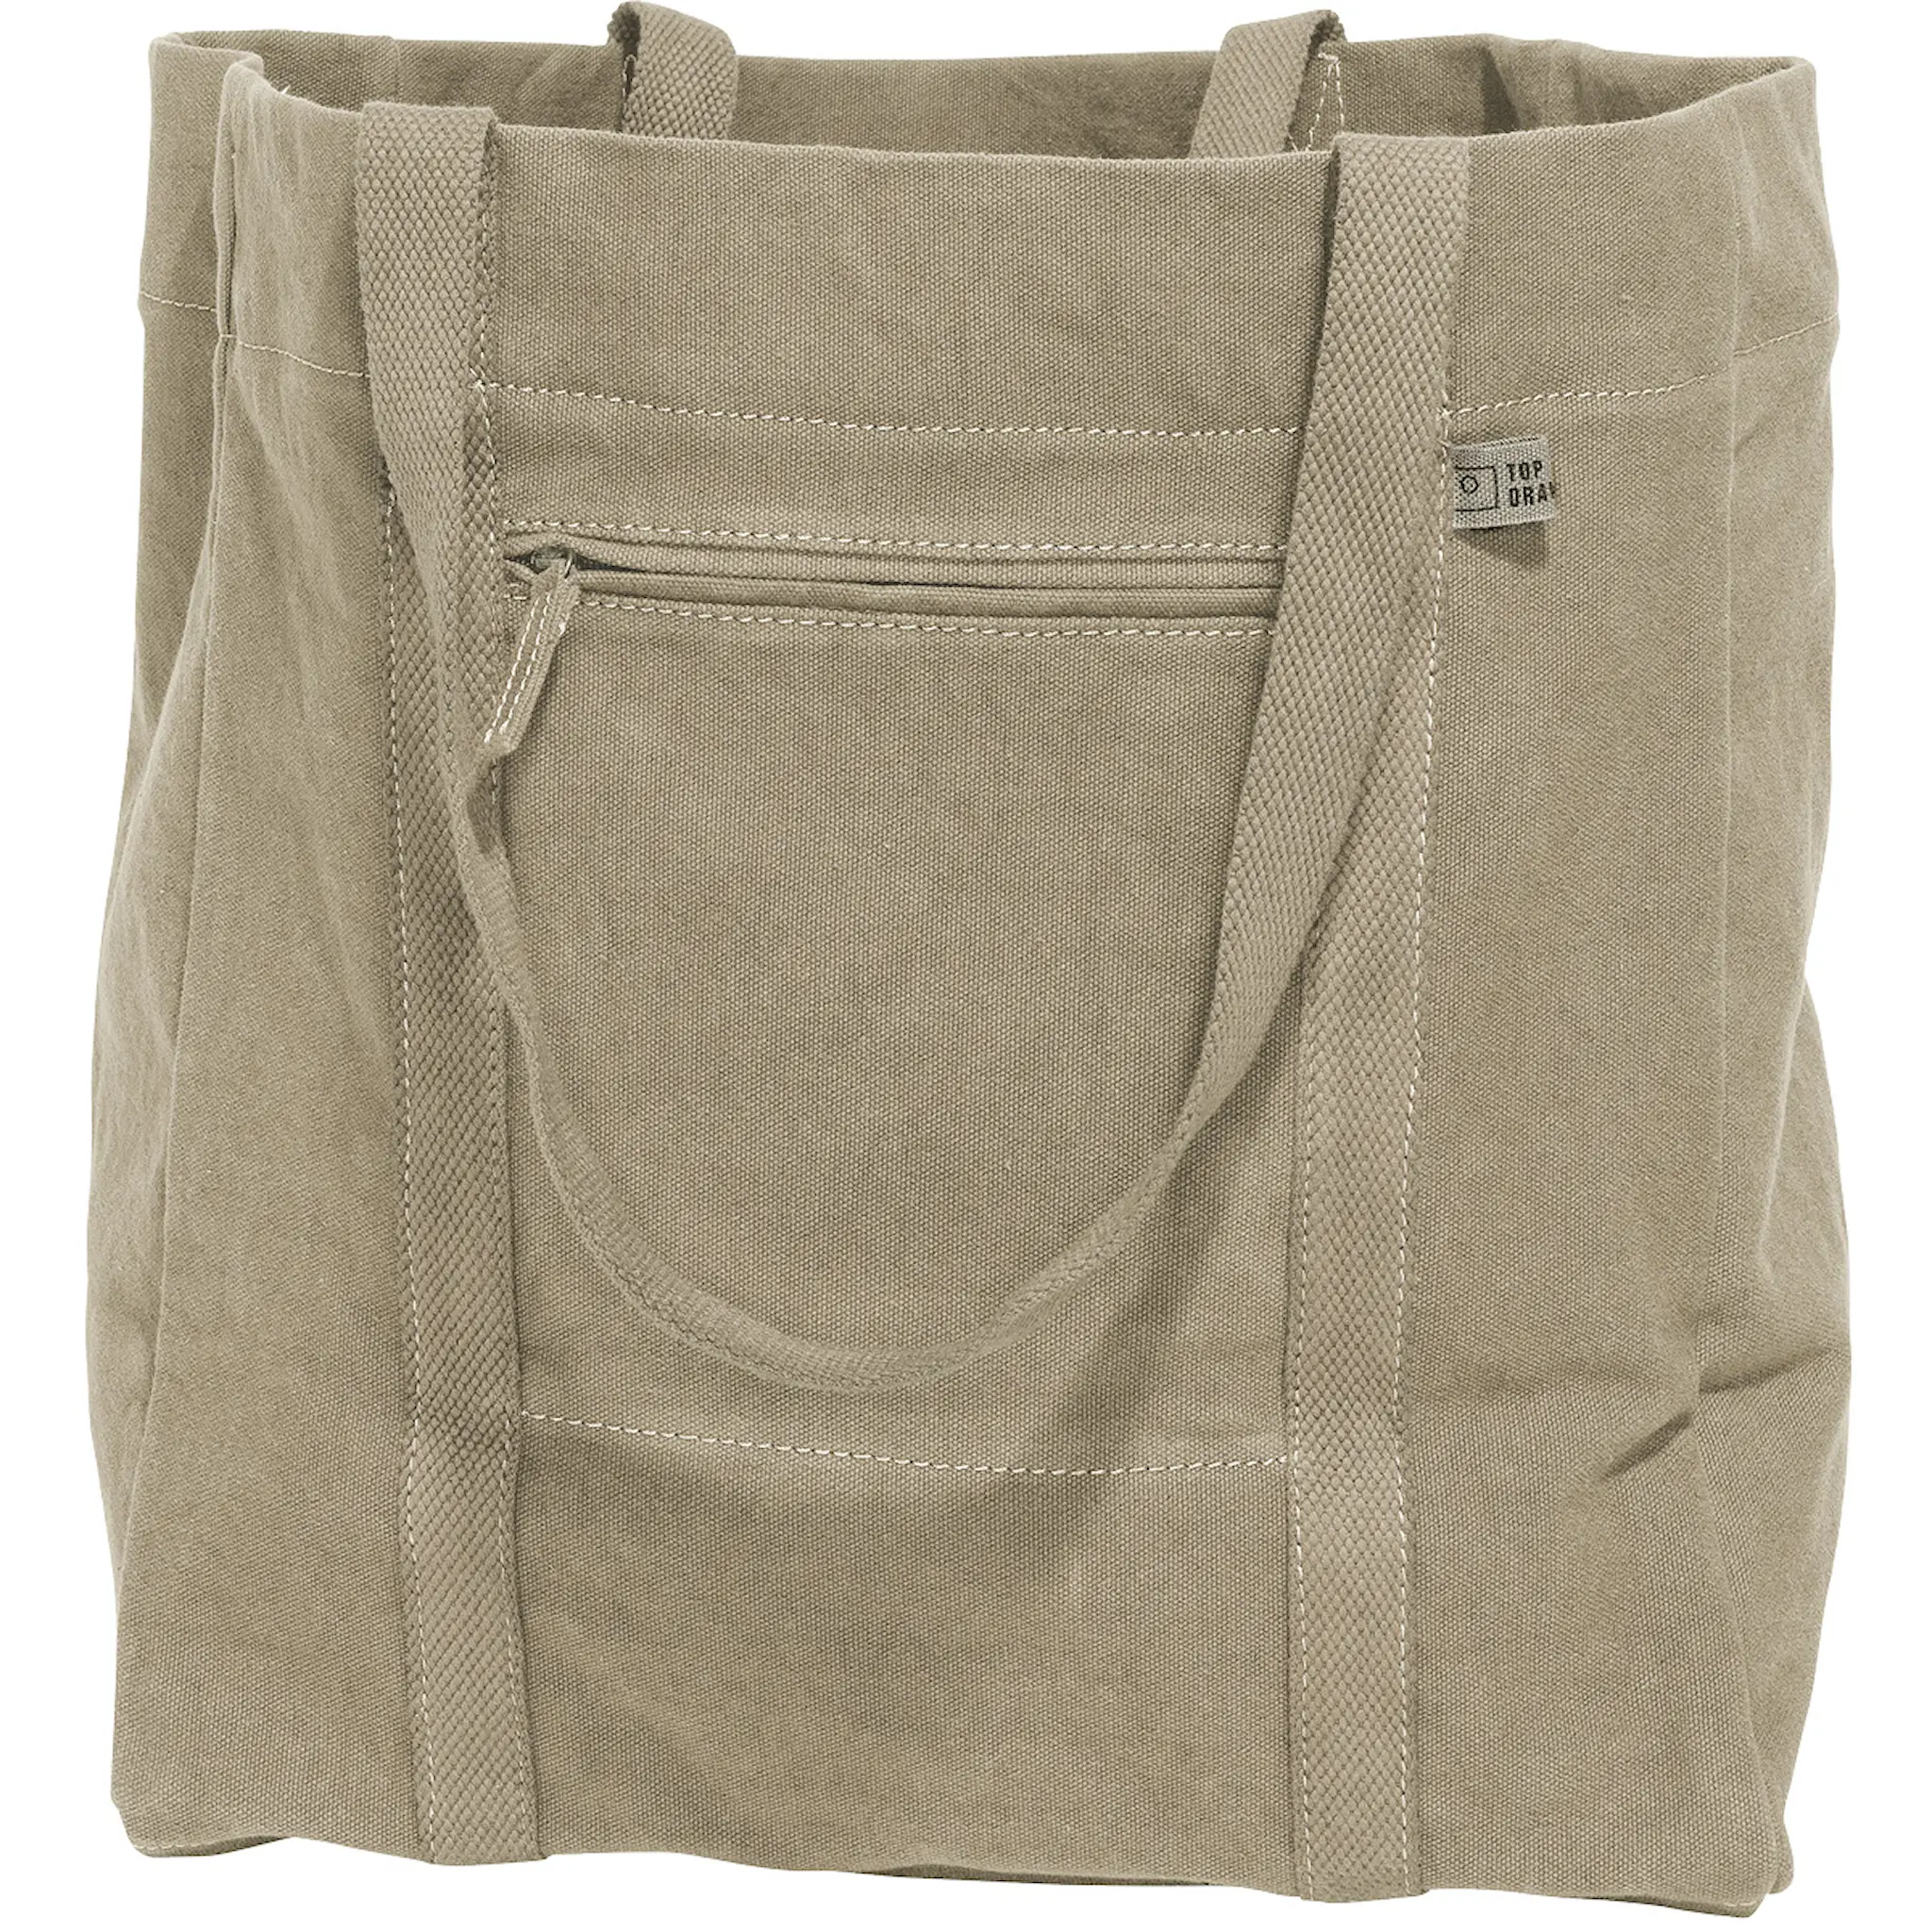 Professional Secrets Culross Shopping Bag Kanvas Sage